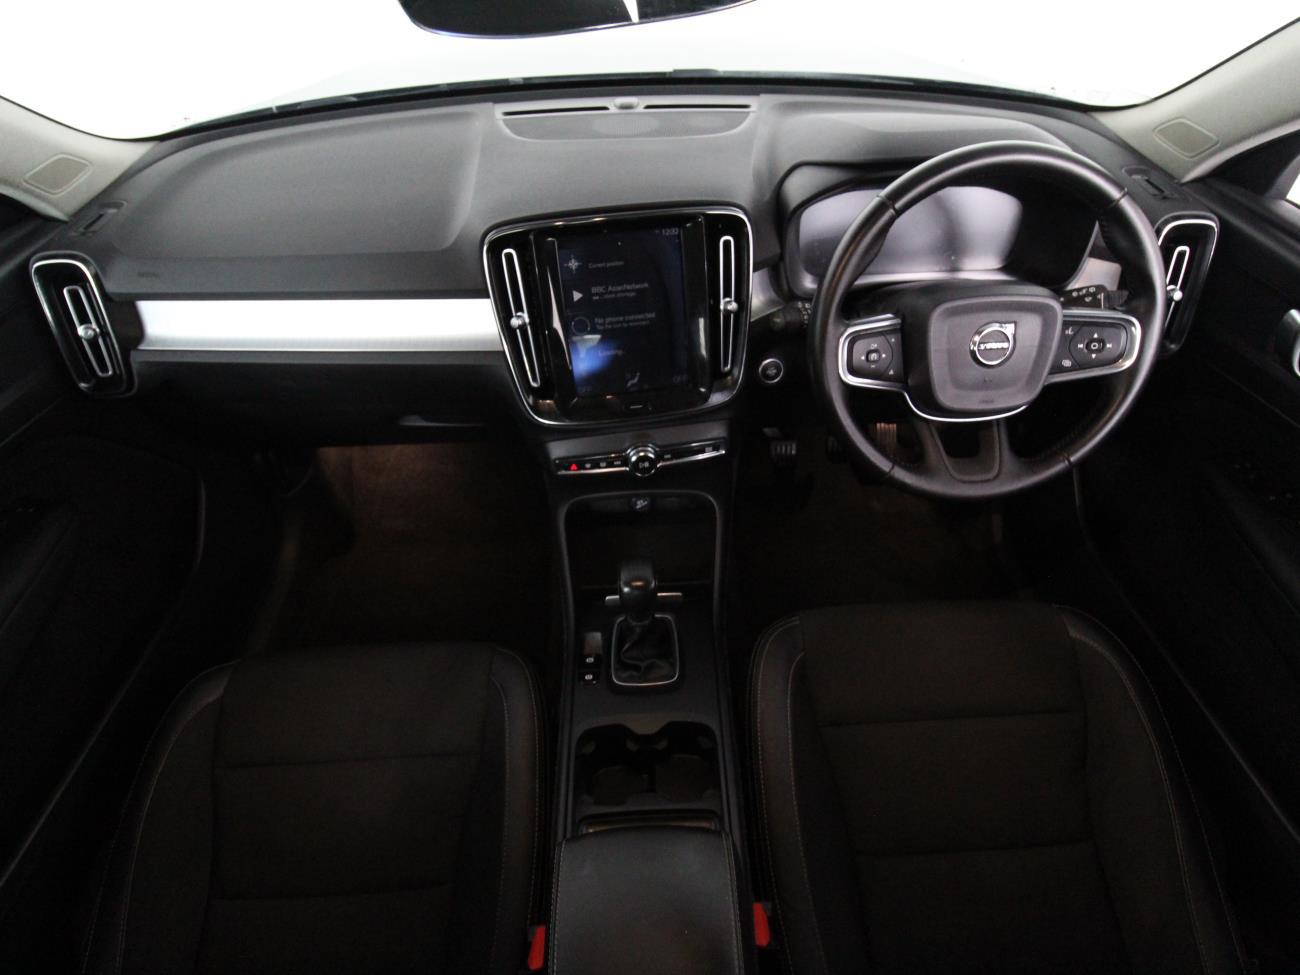 Internal dashboard view of Volvo XC40 SUV in showroom